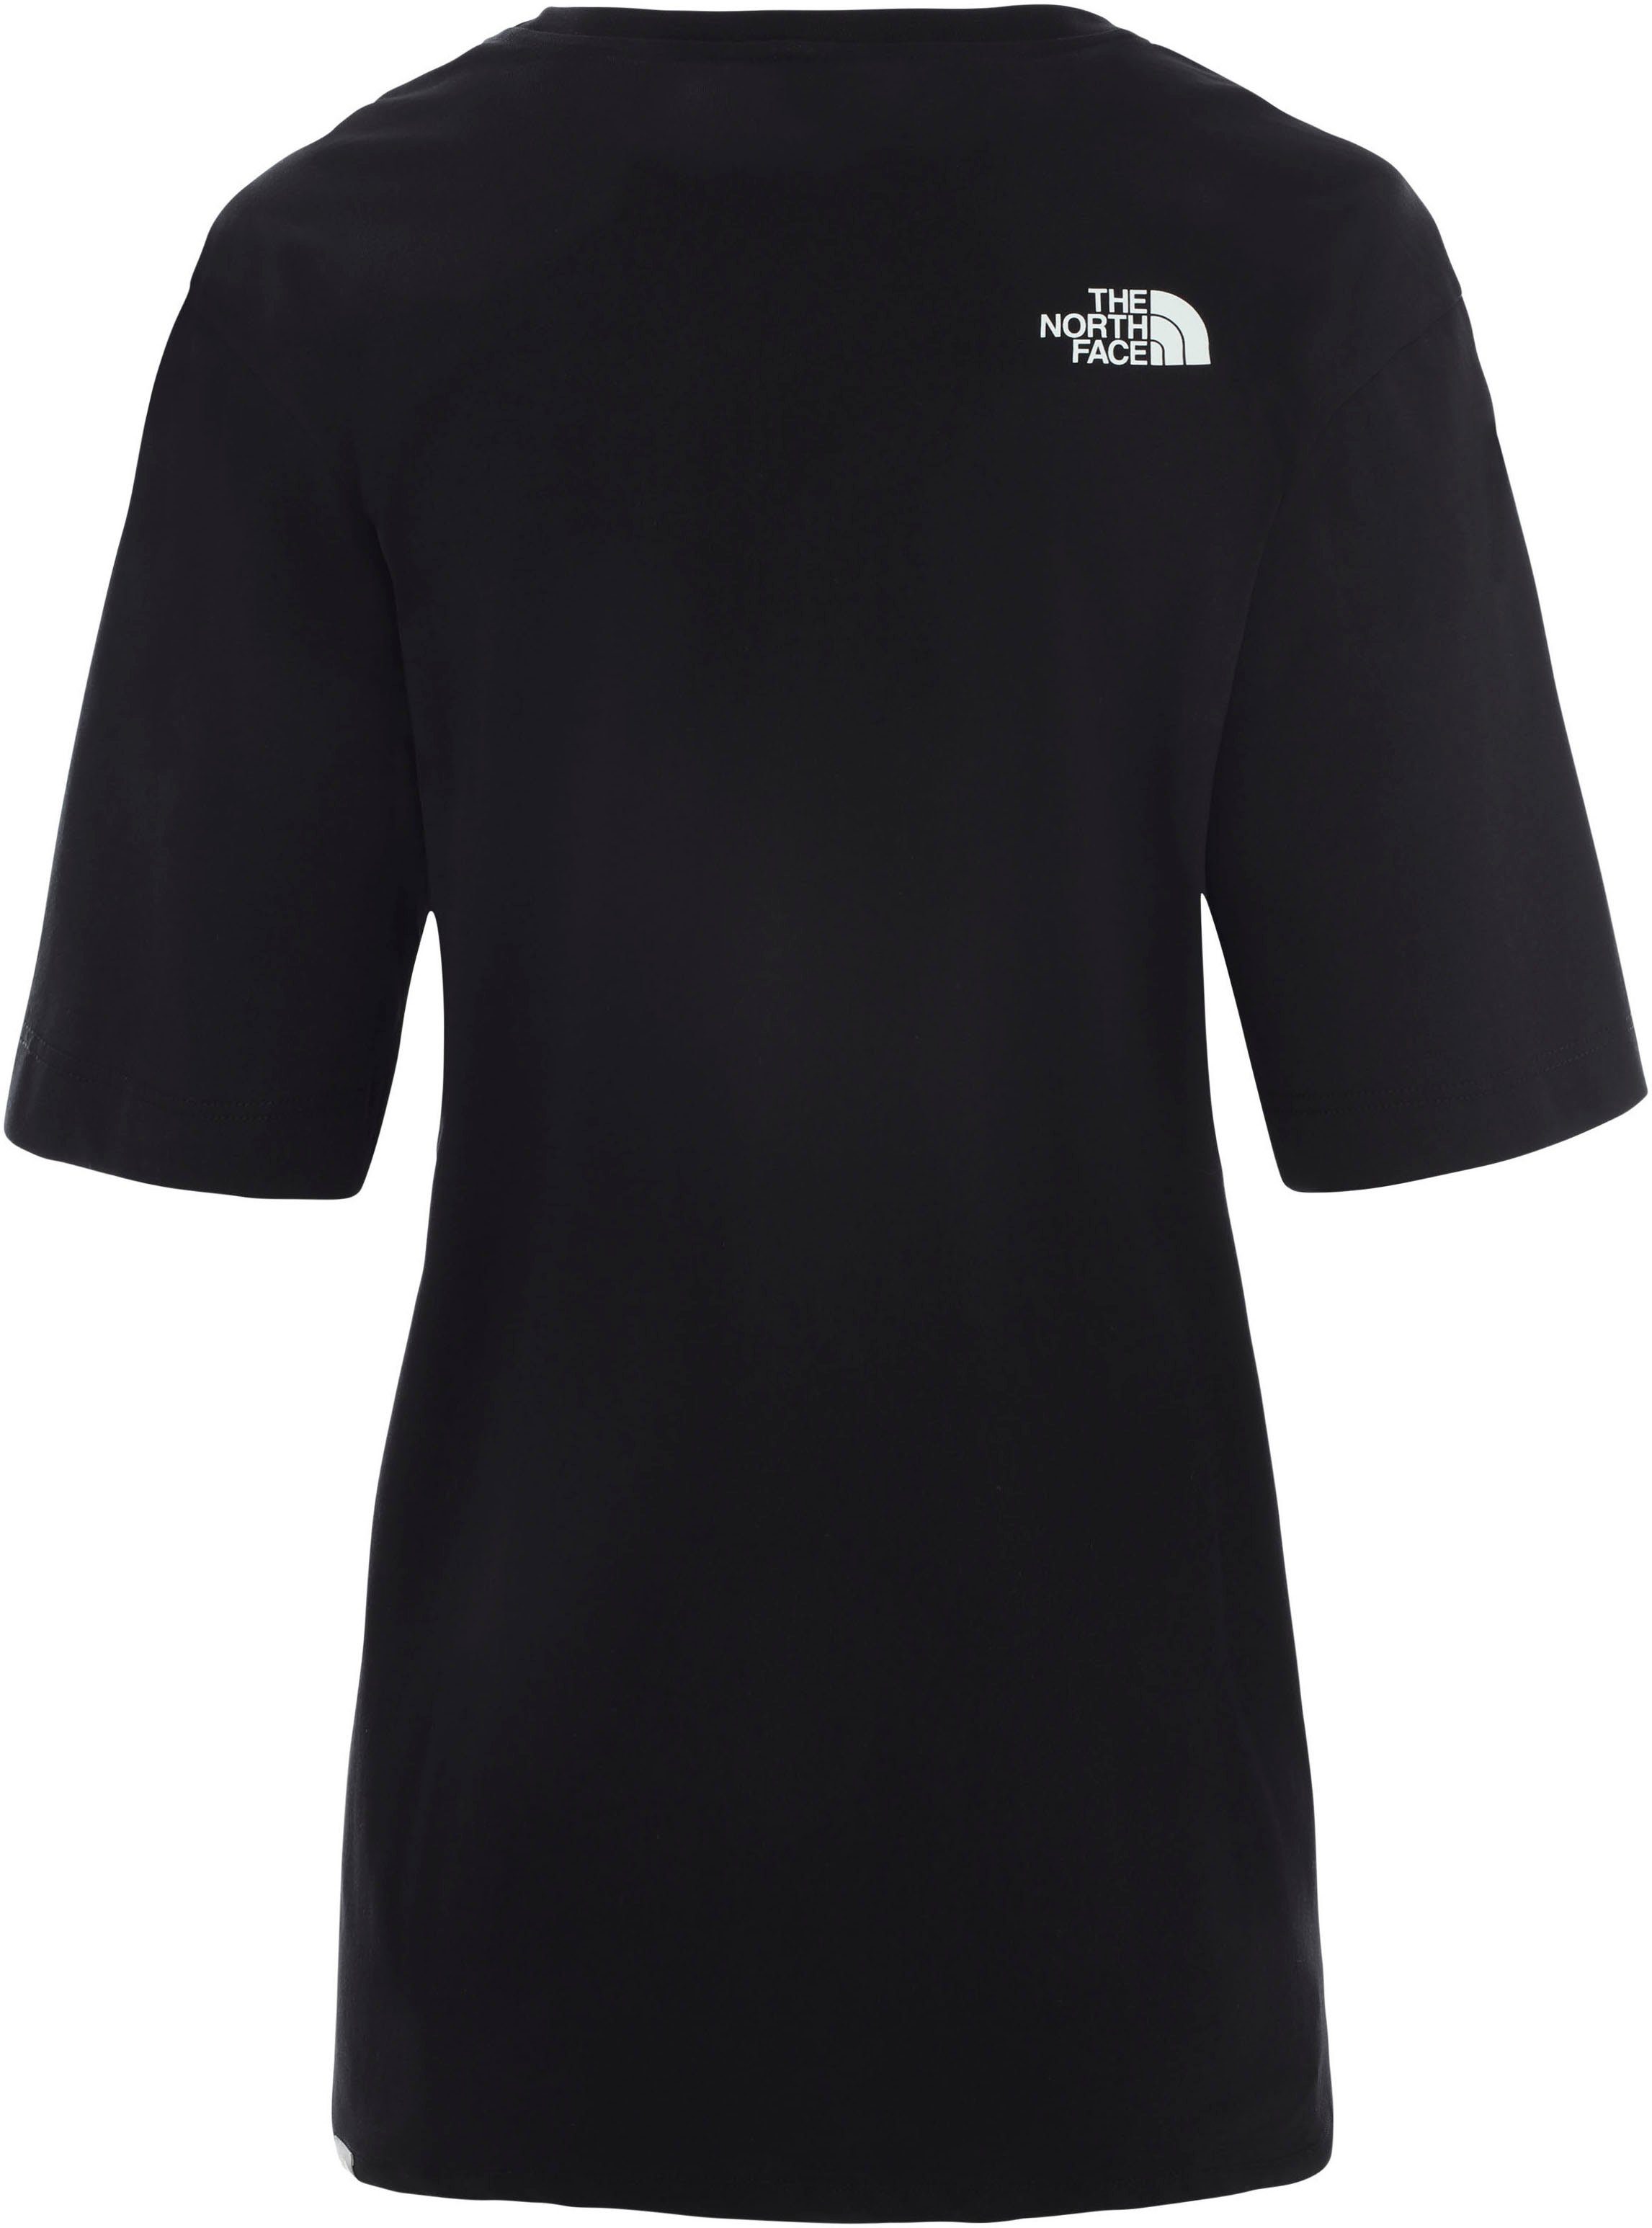 TEE mit North der black T-Shirt EASY The RELAXED auf Brust Face Logodruck W